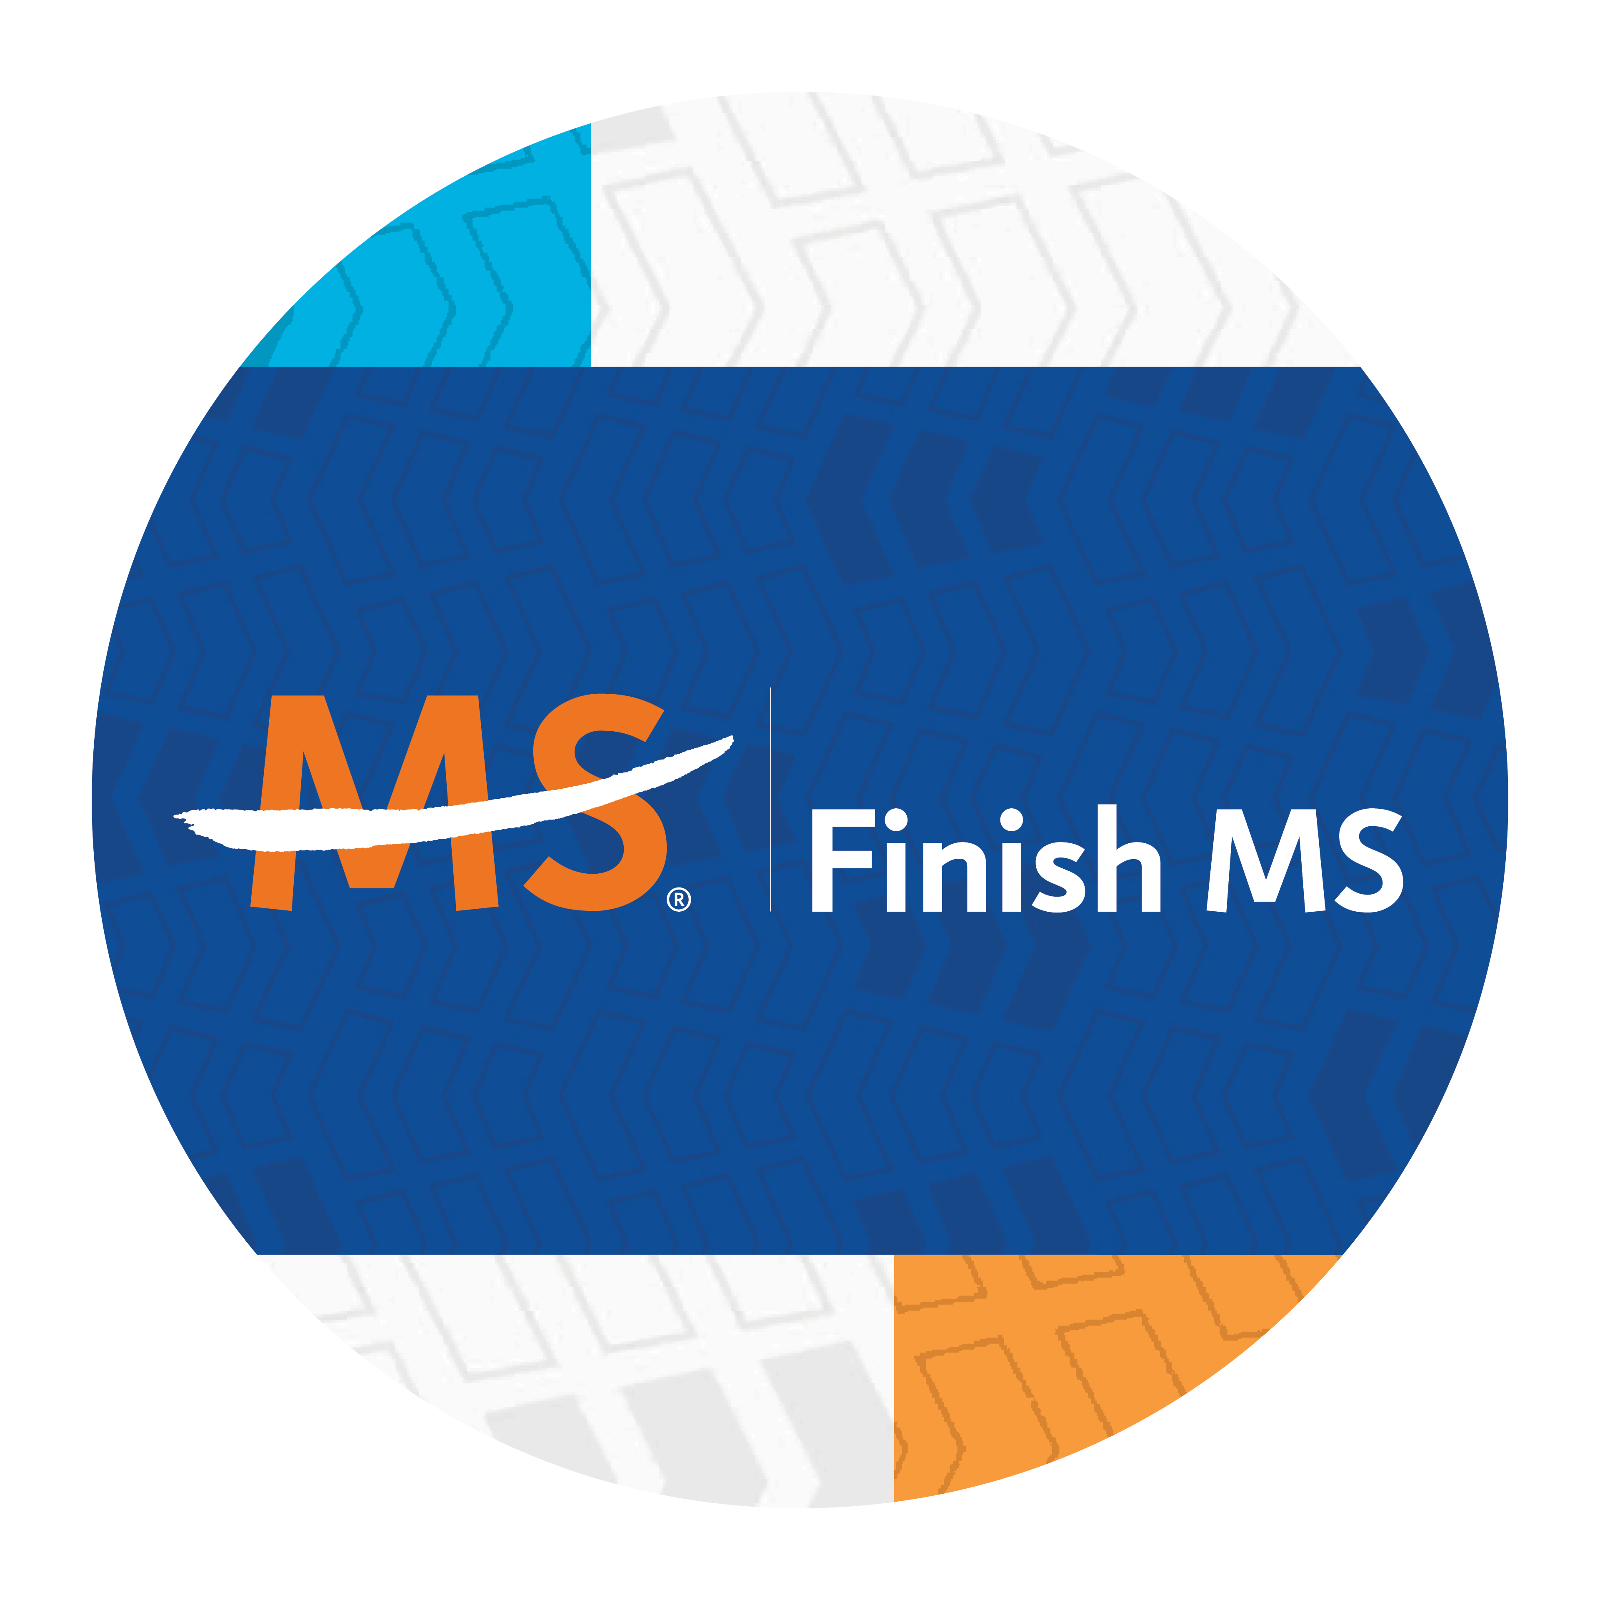 Finish MS - No stroke border